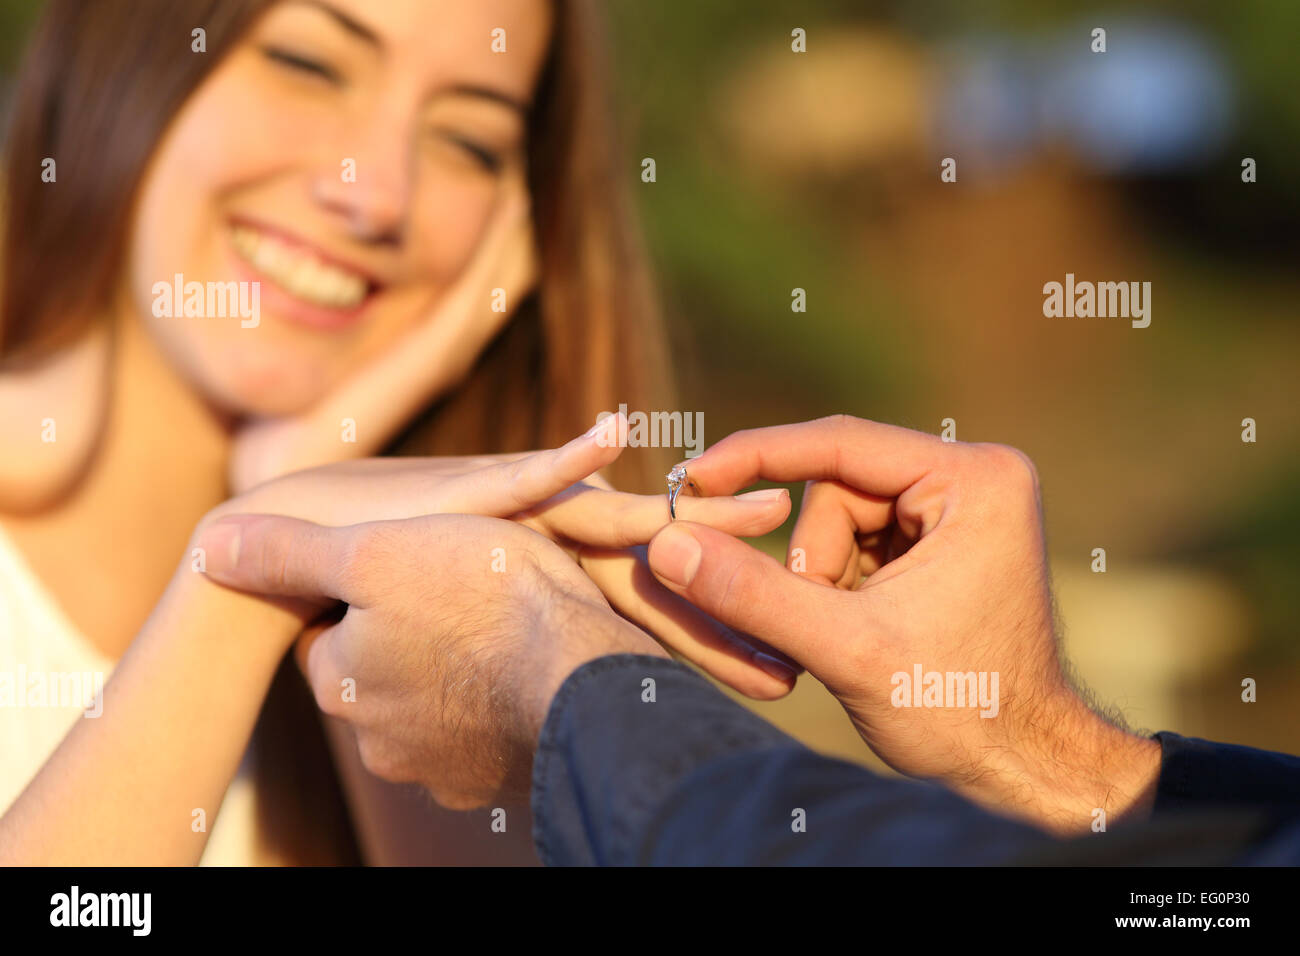 Man Putting Engagement Ring on Finger Girl Stock Image - Image of love,  honeymoon: 190762269